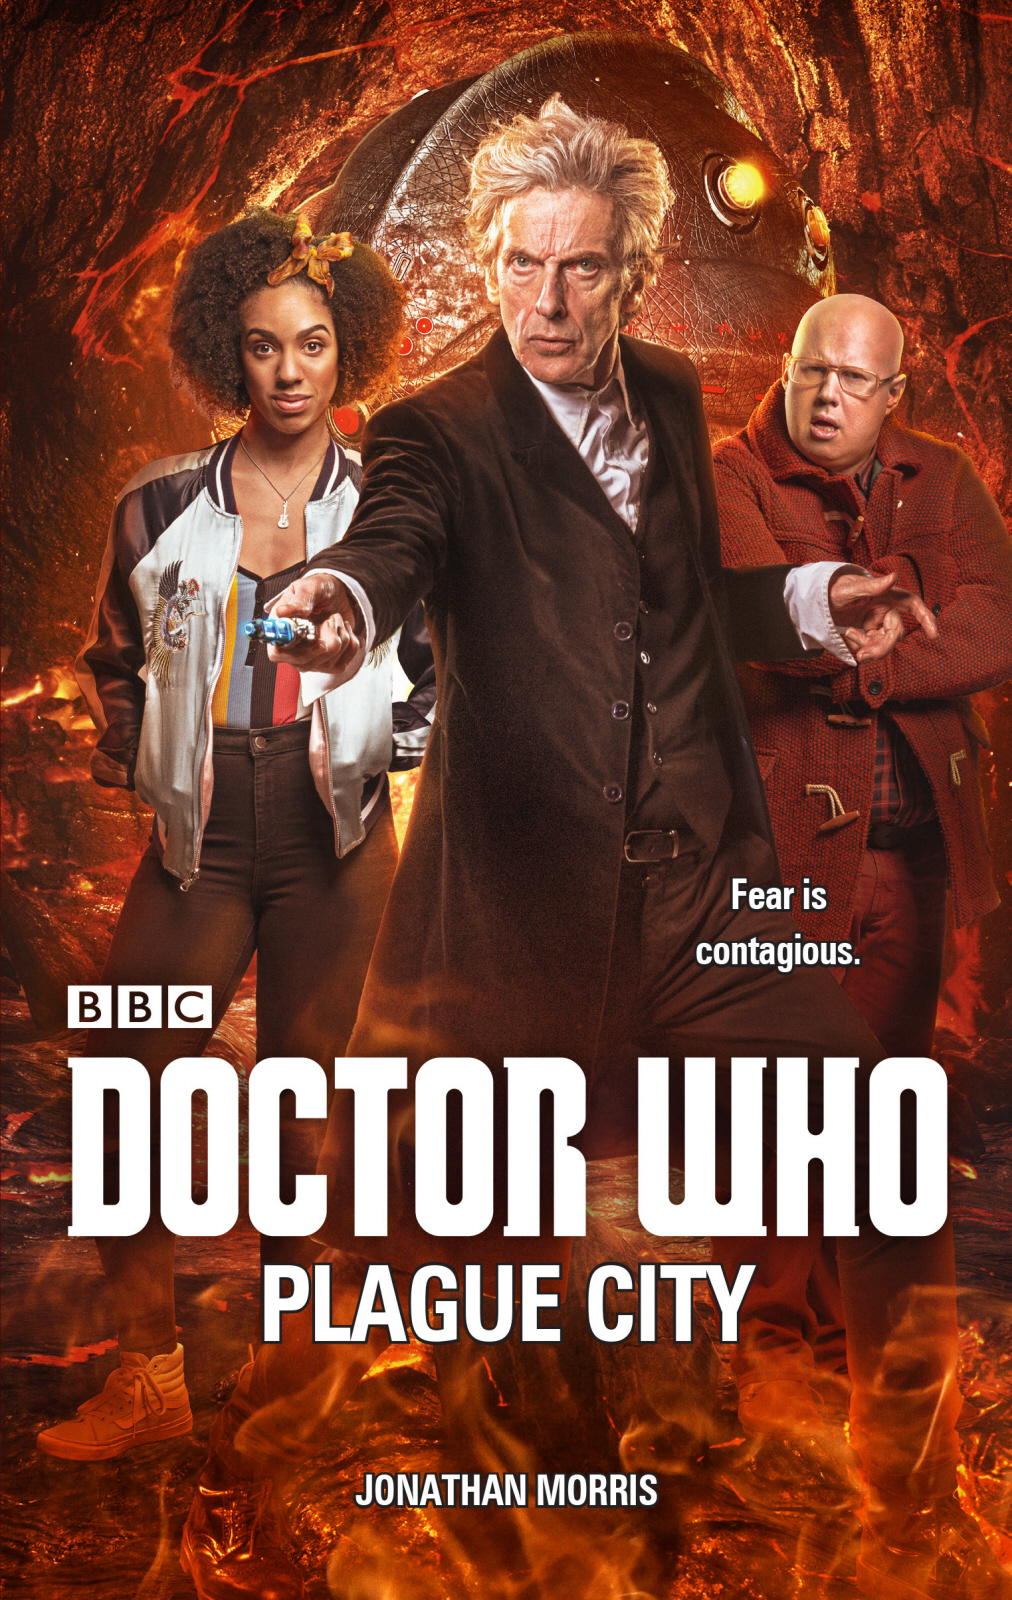 BBC Doctor Who: Plague City